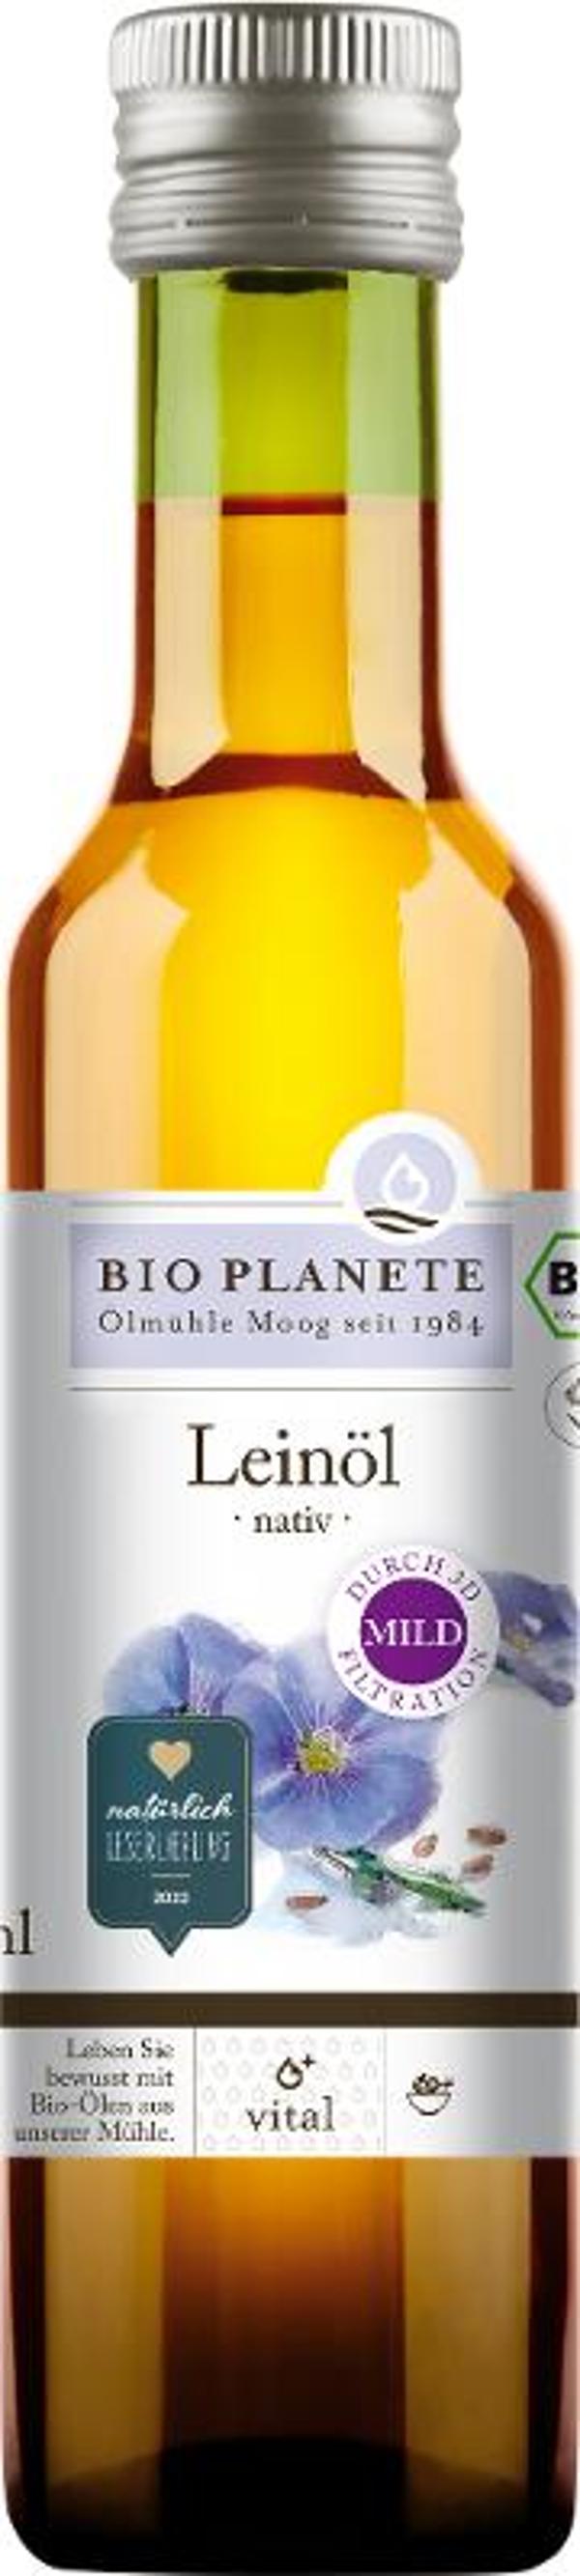 Produktfoto zu Leinöl nativ 250ml Bio Planete